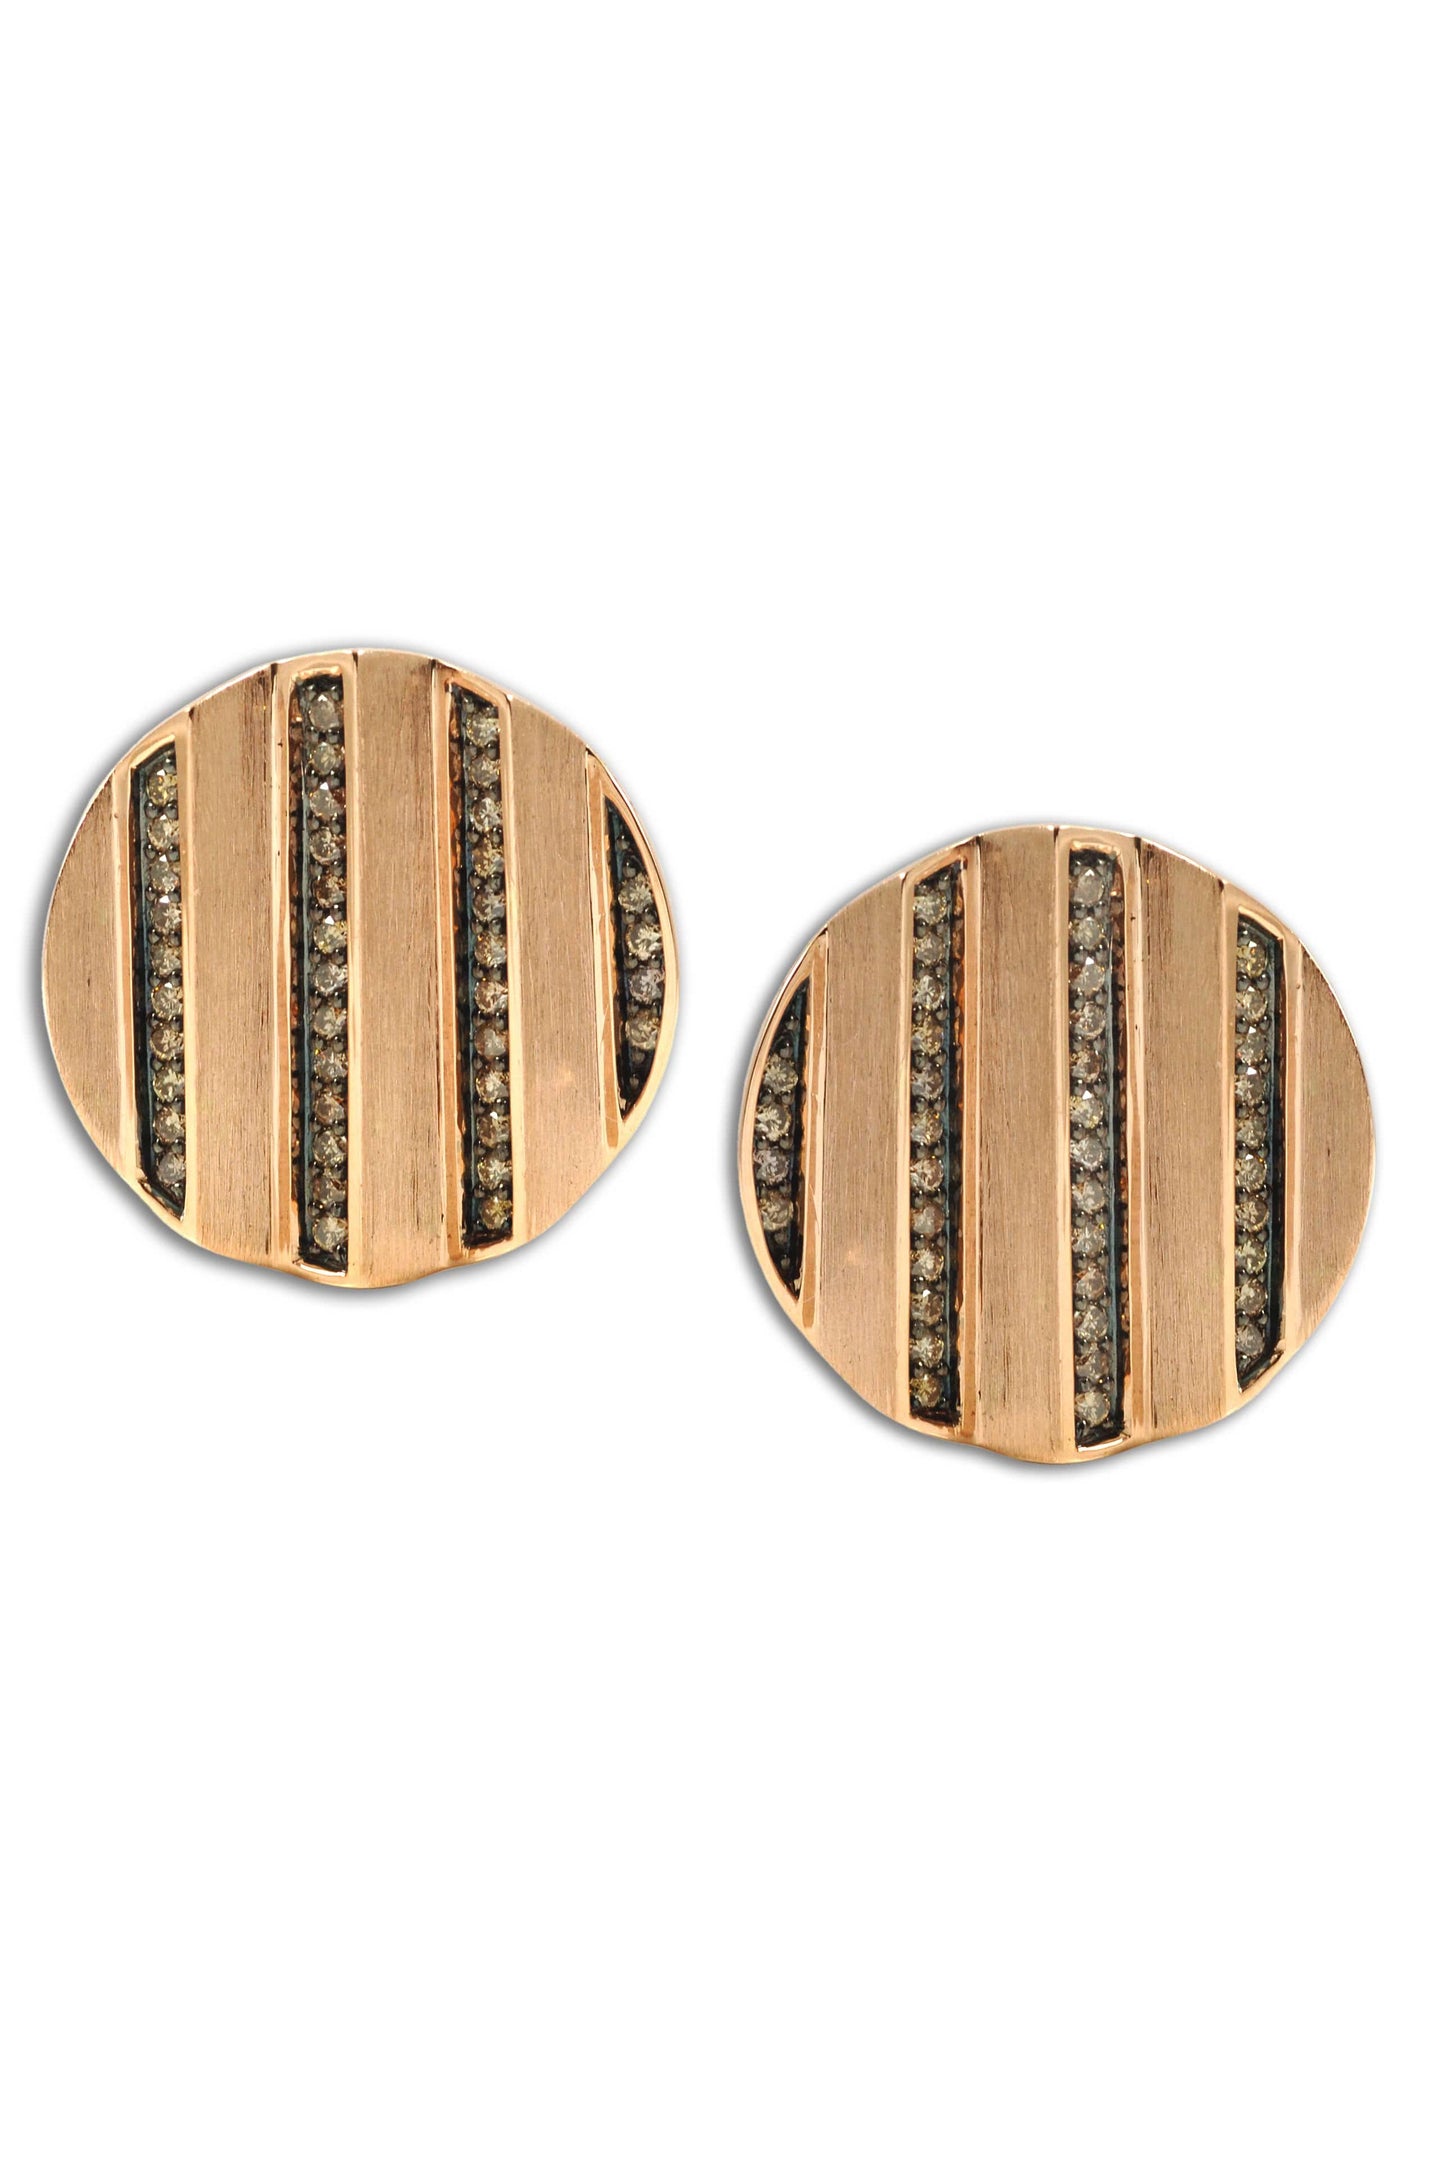 KAVANT & SHARART-Brown Diamond Button Earrings-ROSE GOLD